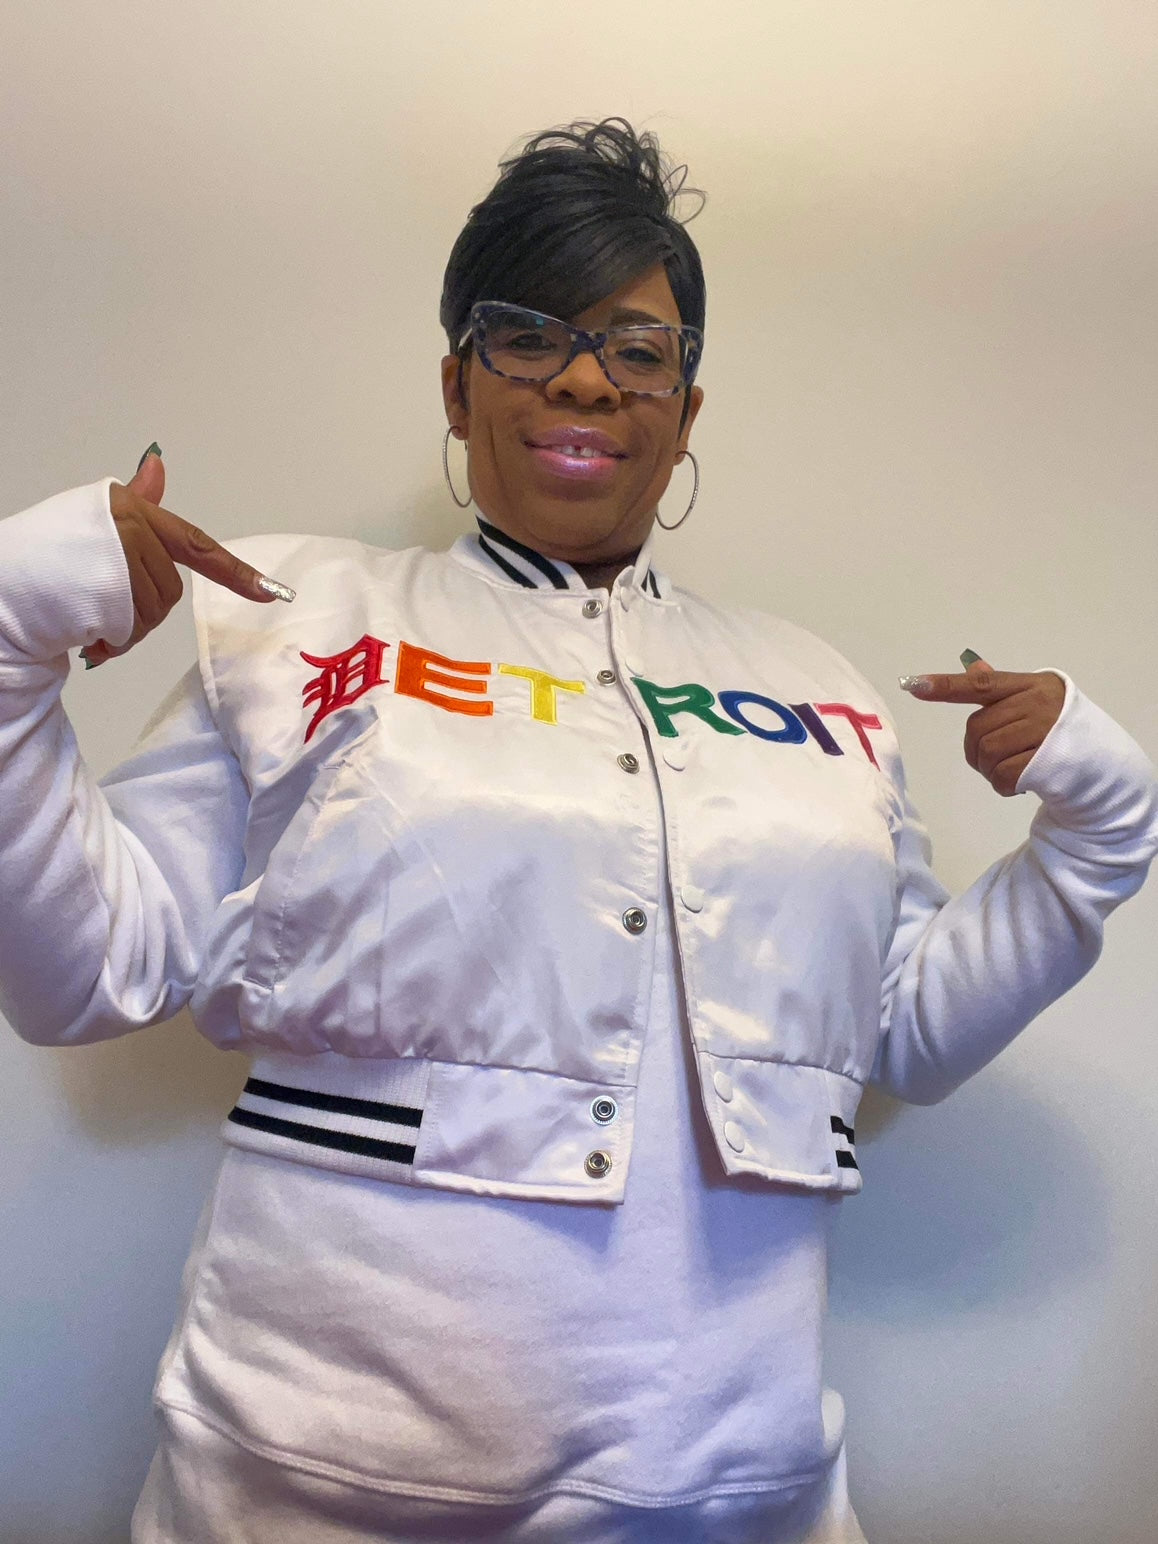 Detroit Mitten Crop Top Hoodie Vest w/ Rainbow Letters (White)